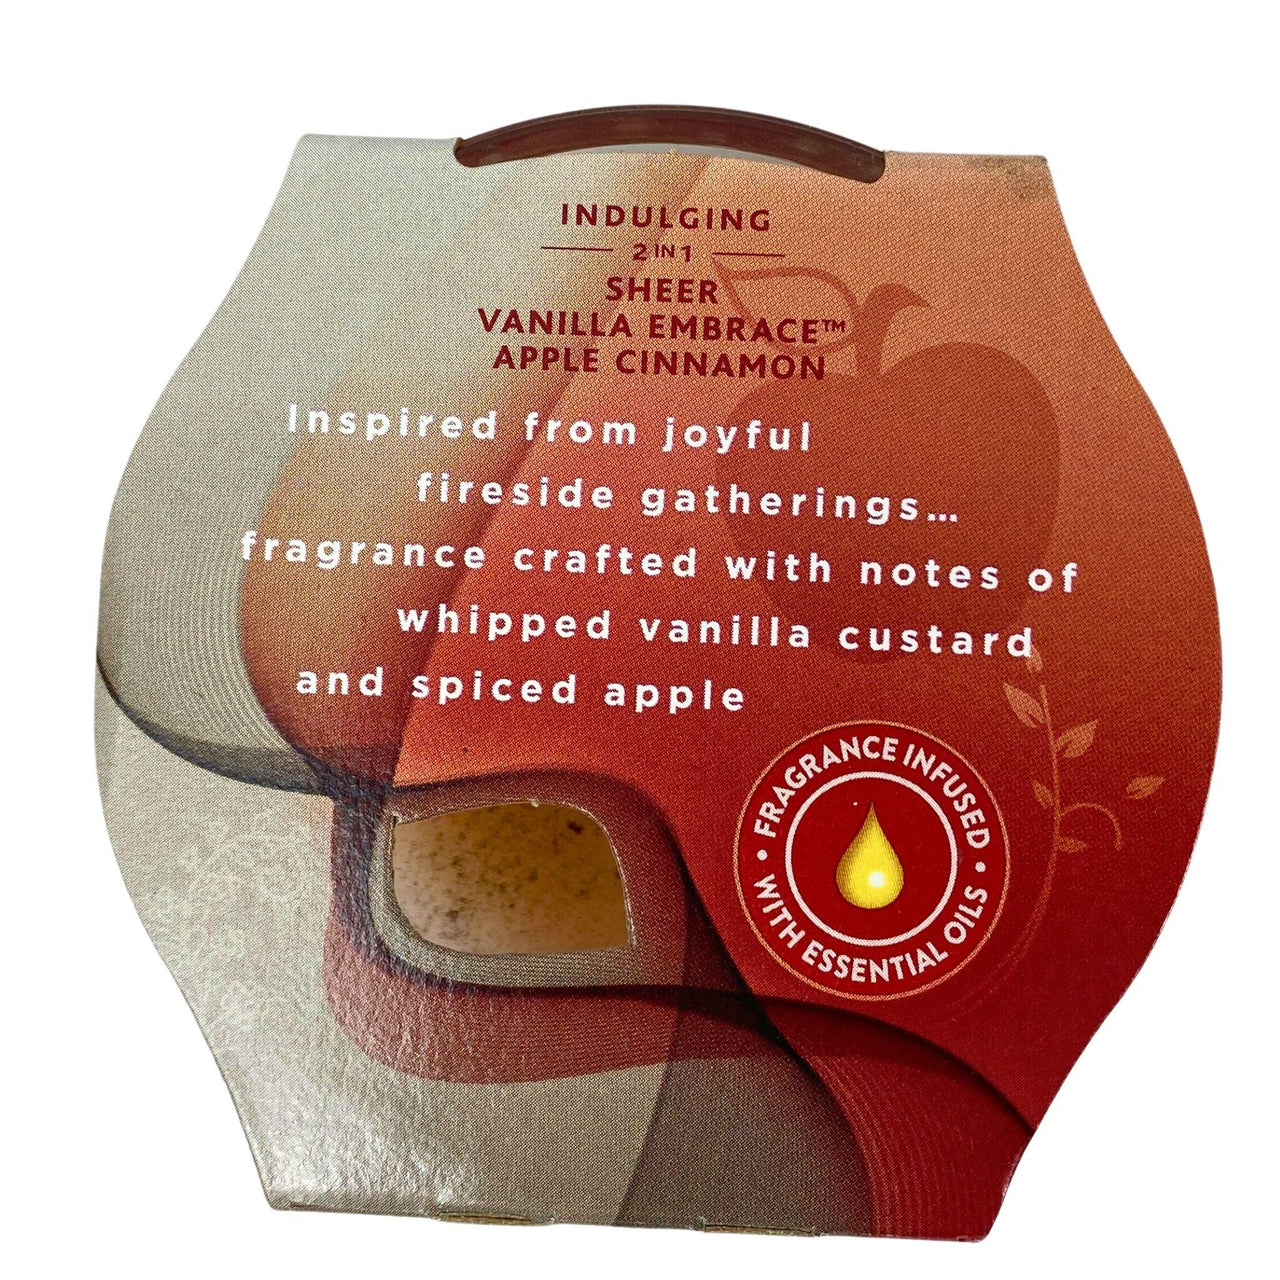 Glade Indulging 2 in 1 Sheer Vanilla Embrace Apple Cinnamon Fragrance 3.4OZ (42 Pcs Lot) - Discount Wholesalers Inc